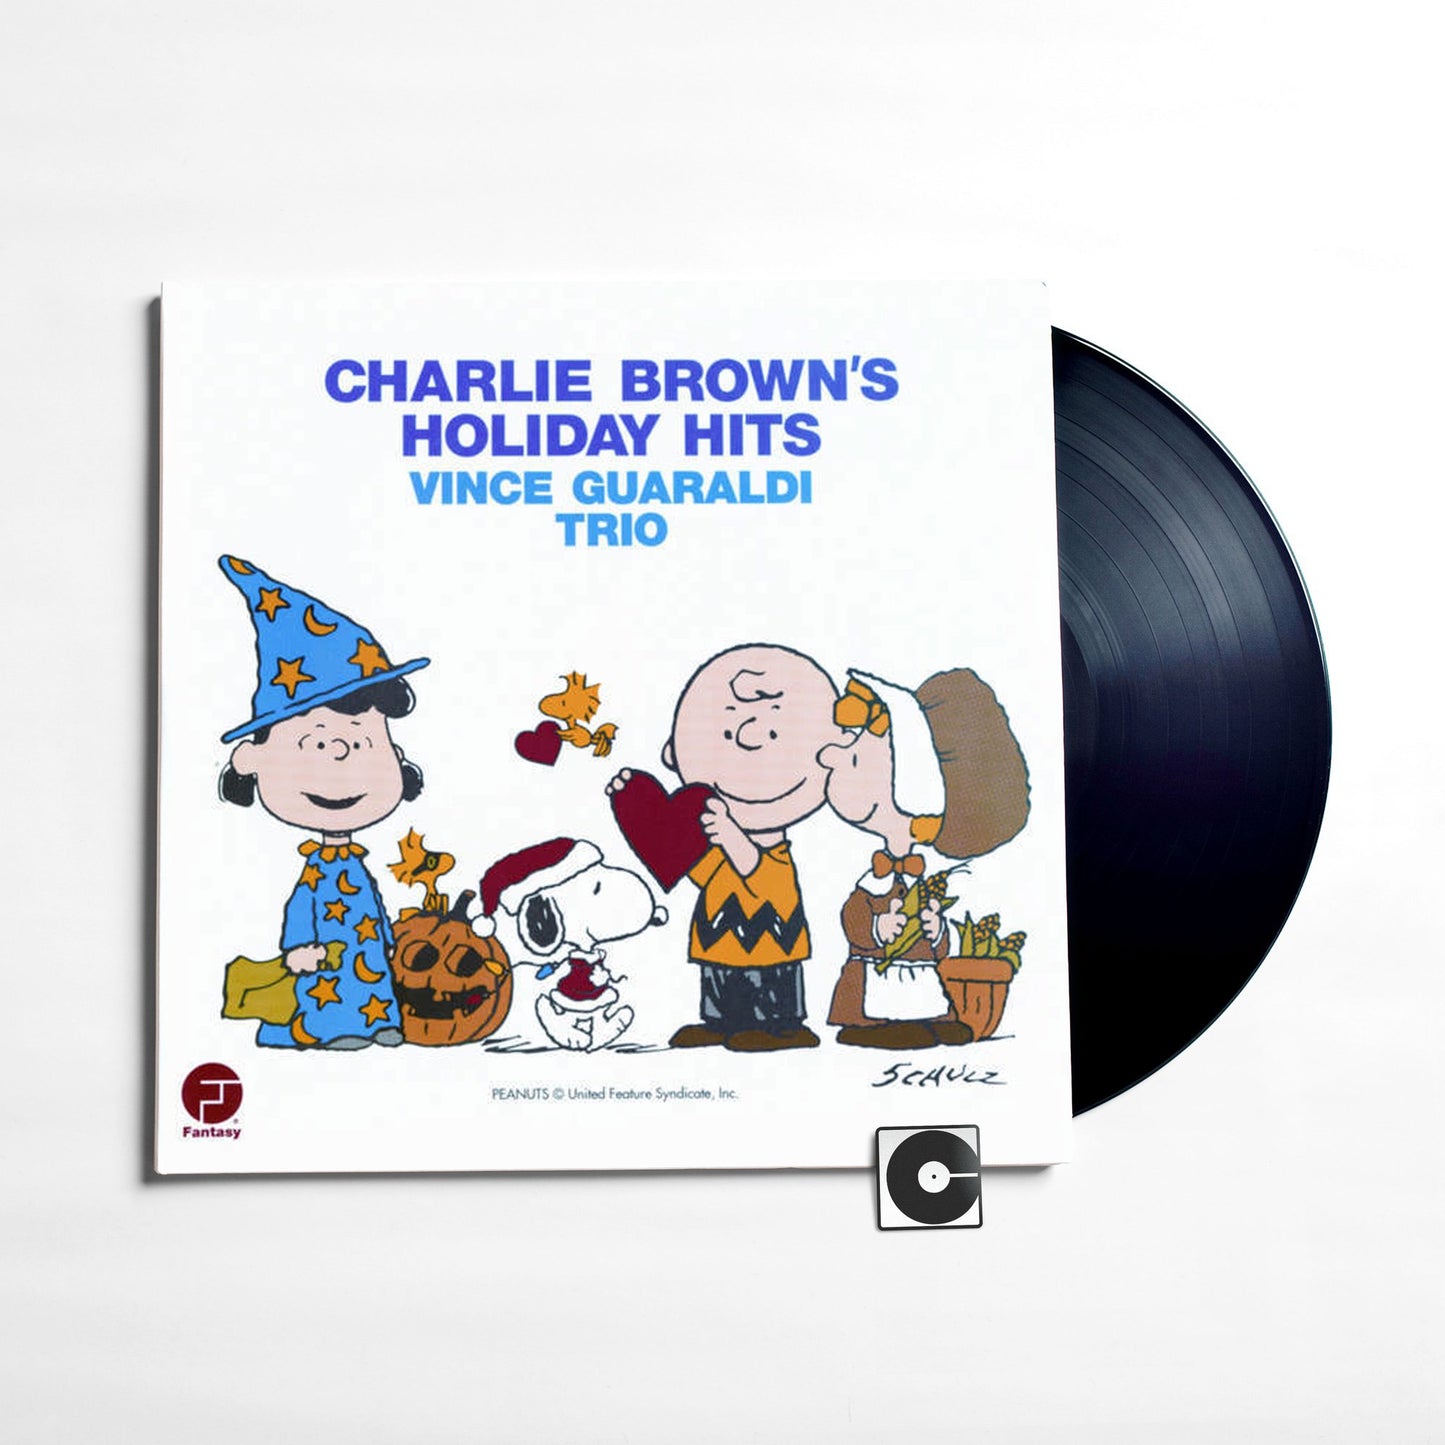 Vince Guaraldi Trio - "Charlie Brown's Holiday Hits"